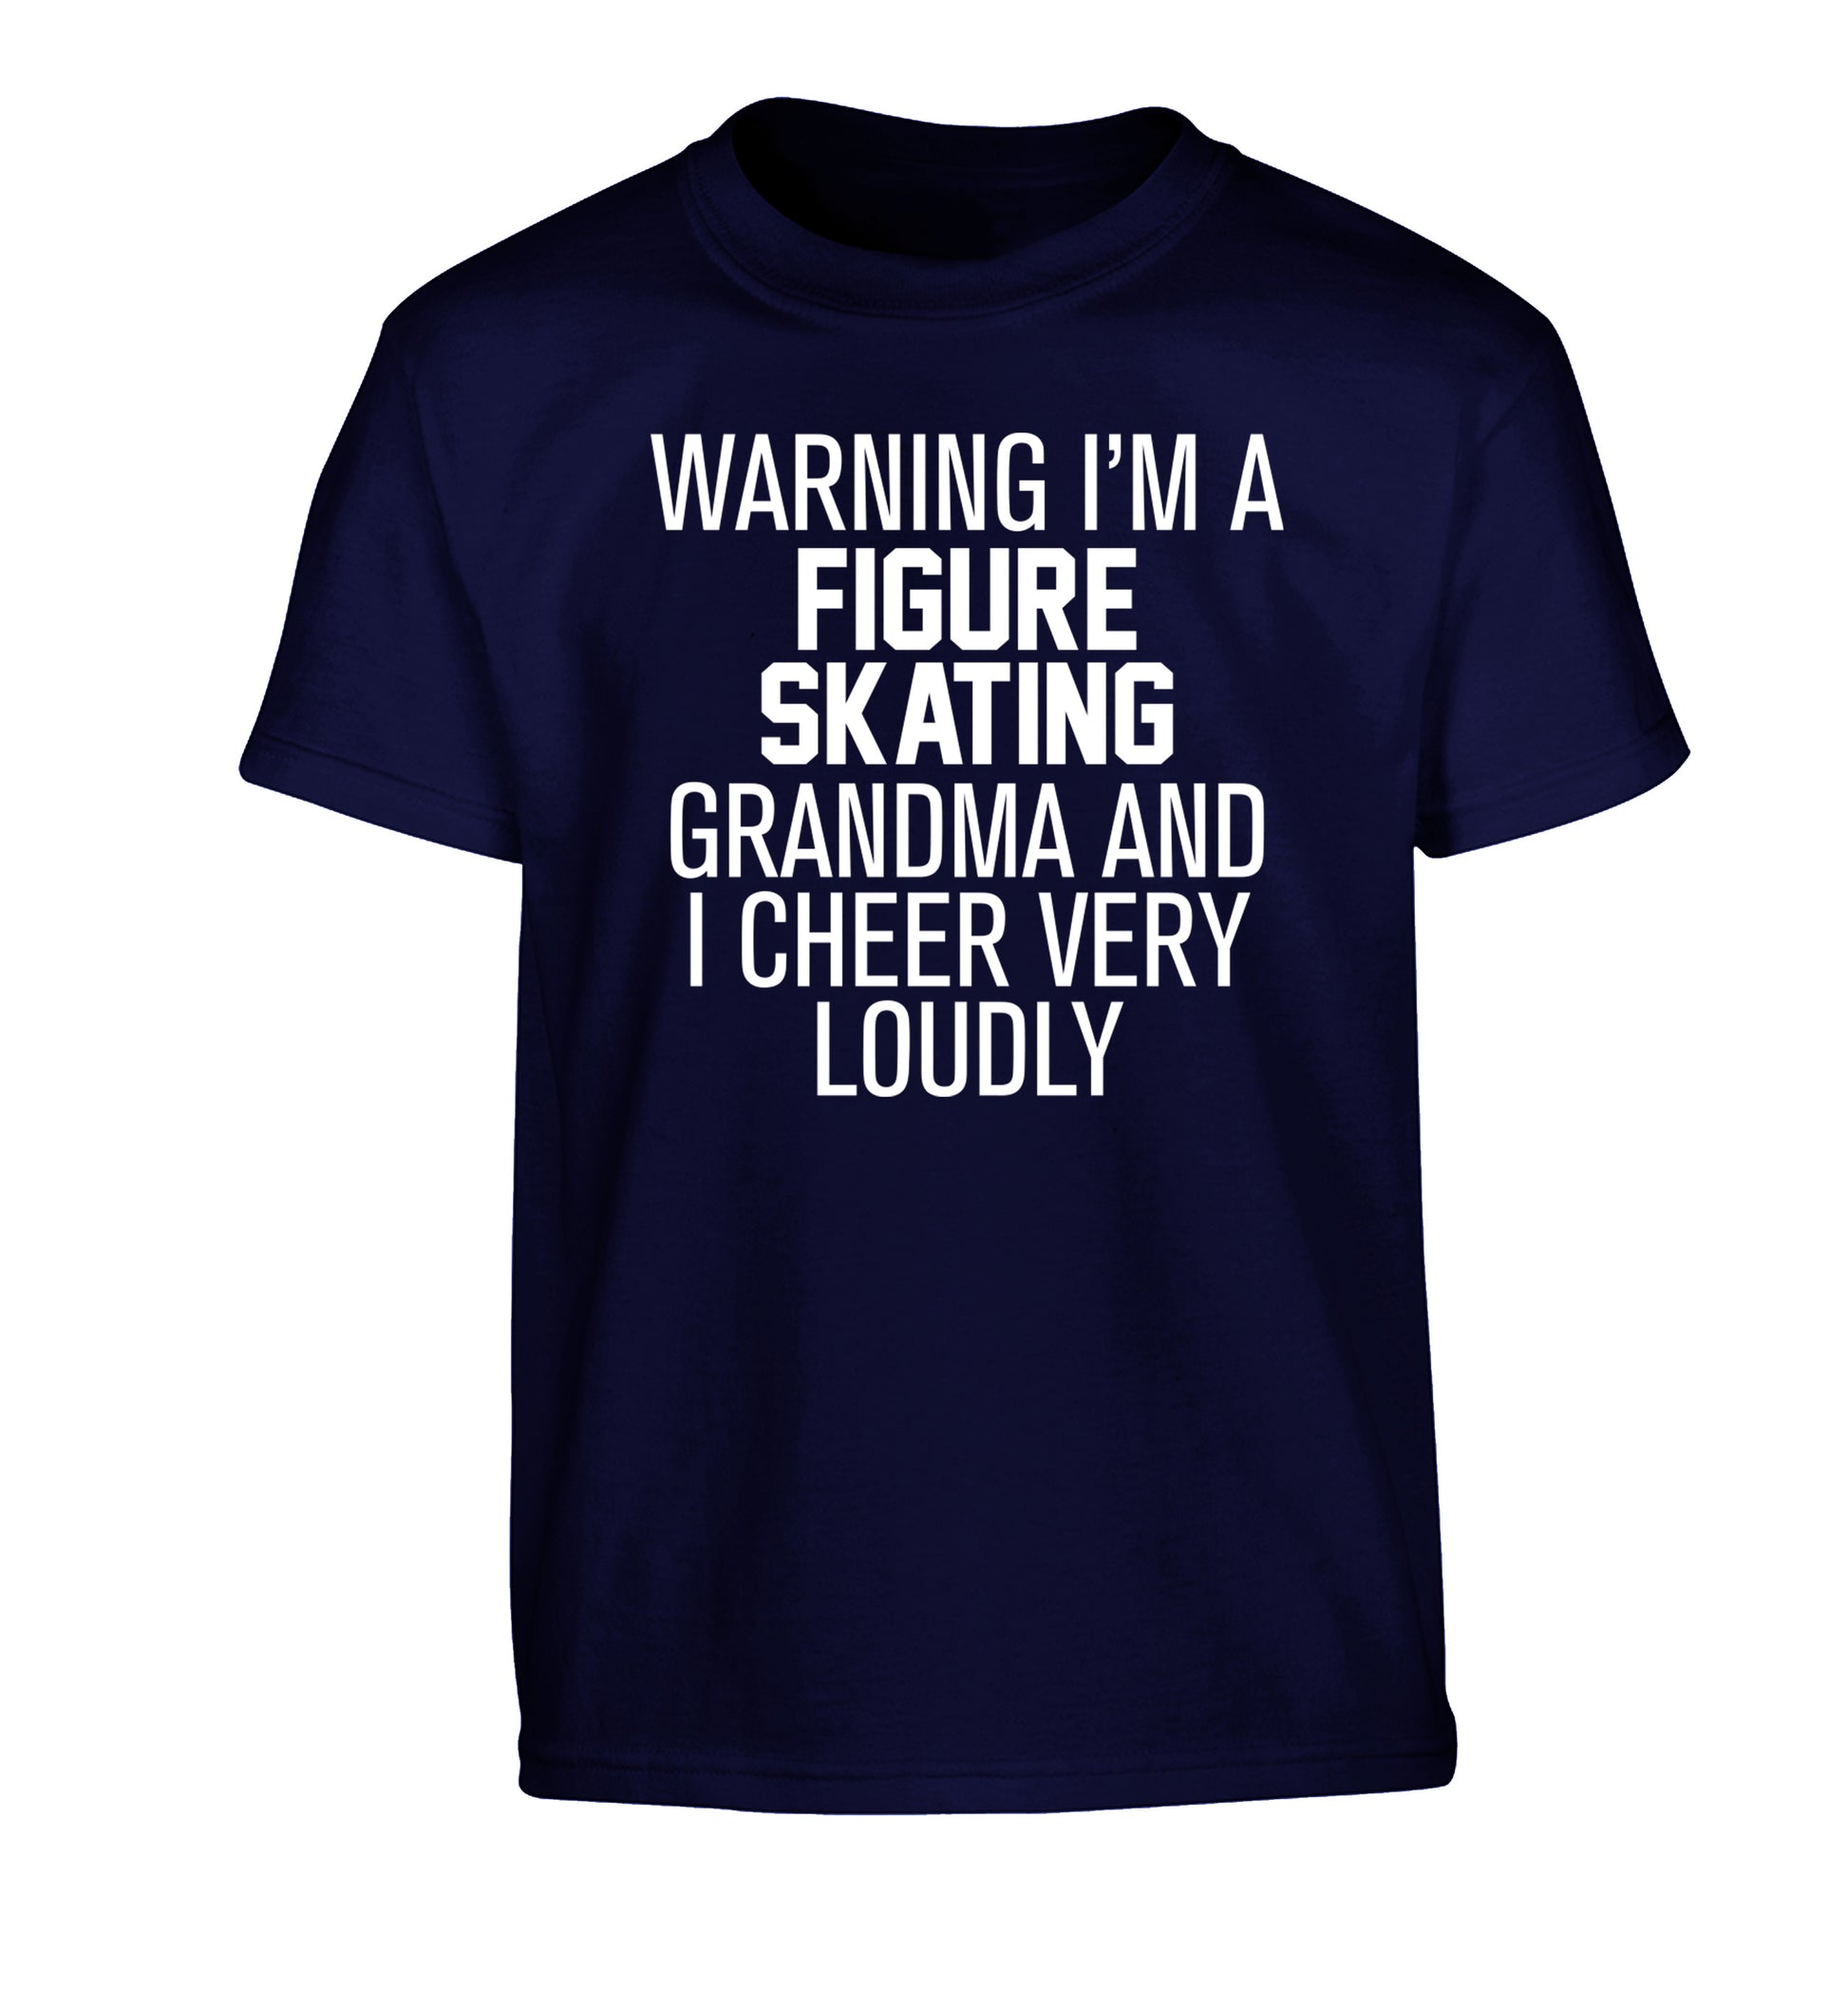 Warning I'm a figure skating grandma and I cheer very loudly Children's navy Tshirt 12-14 Years